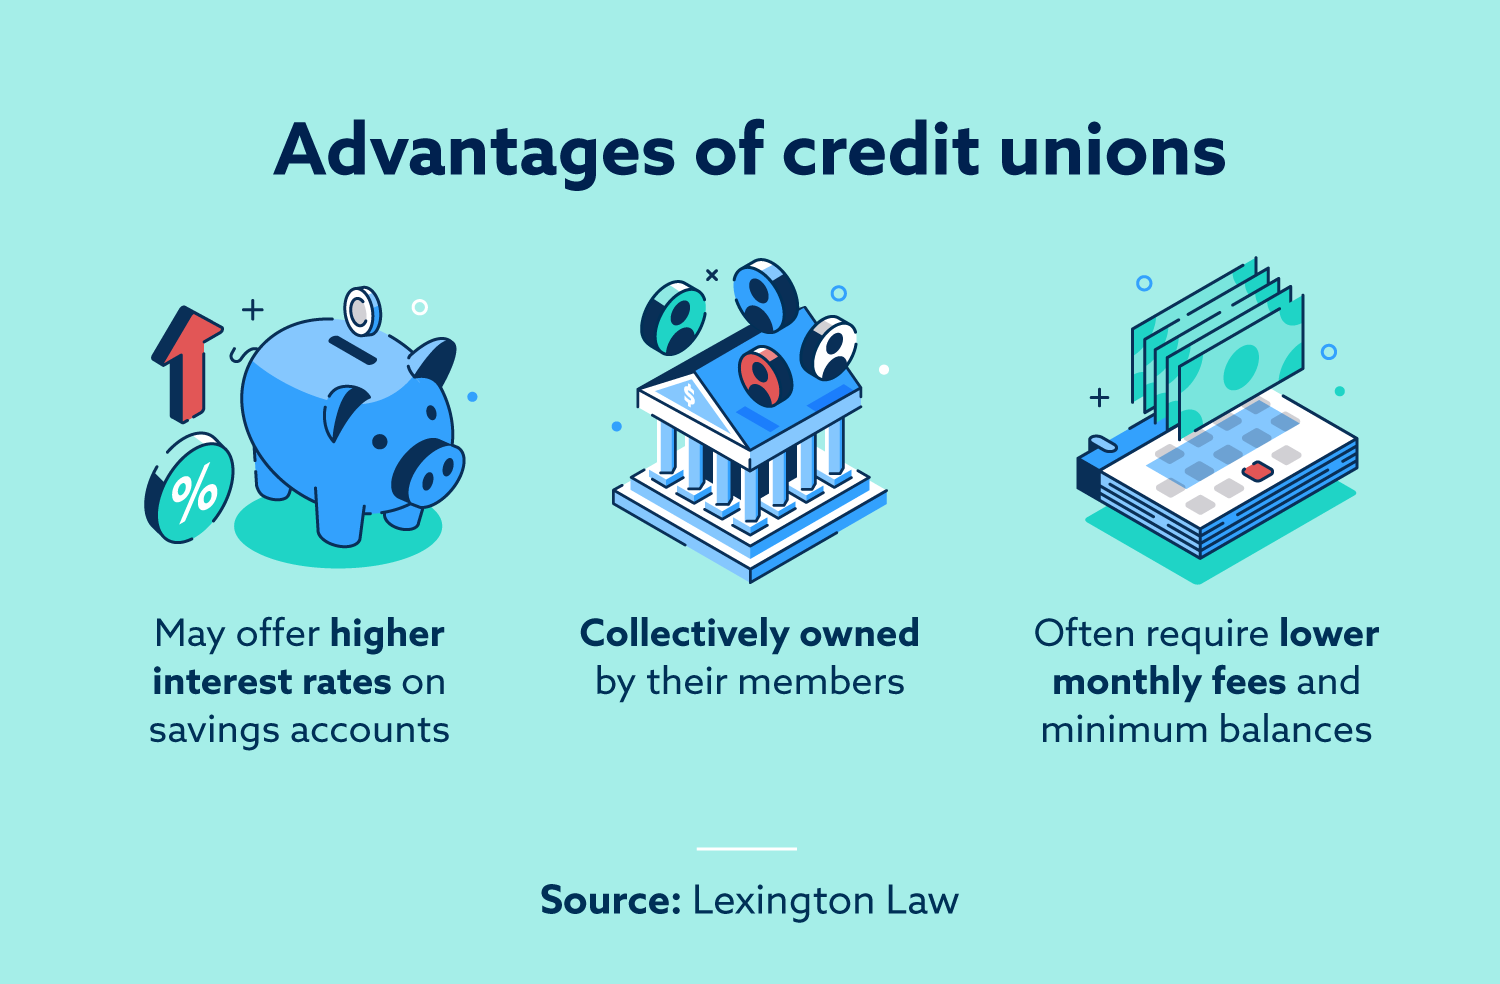 Advantages of credit unions